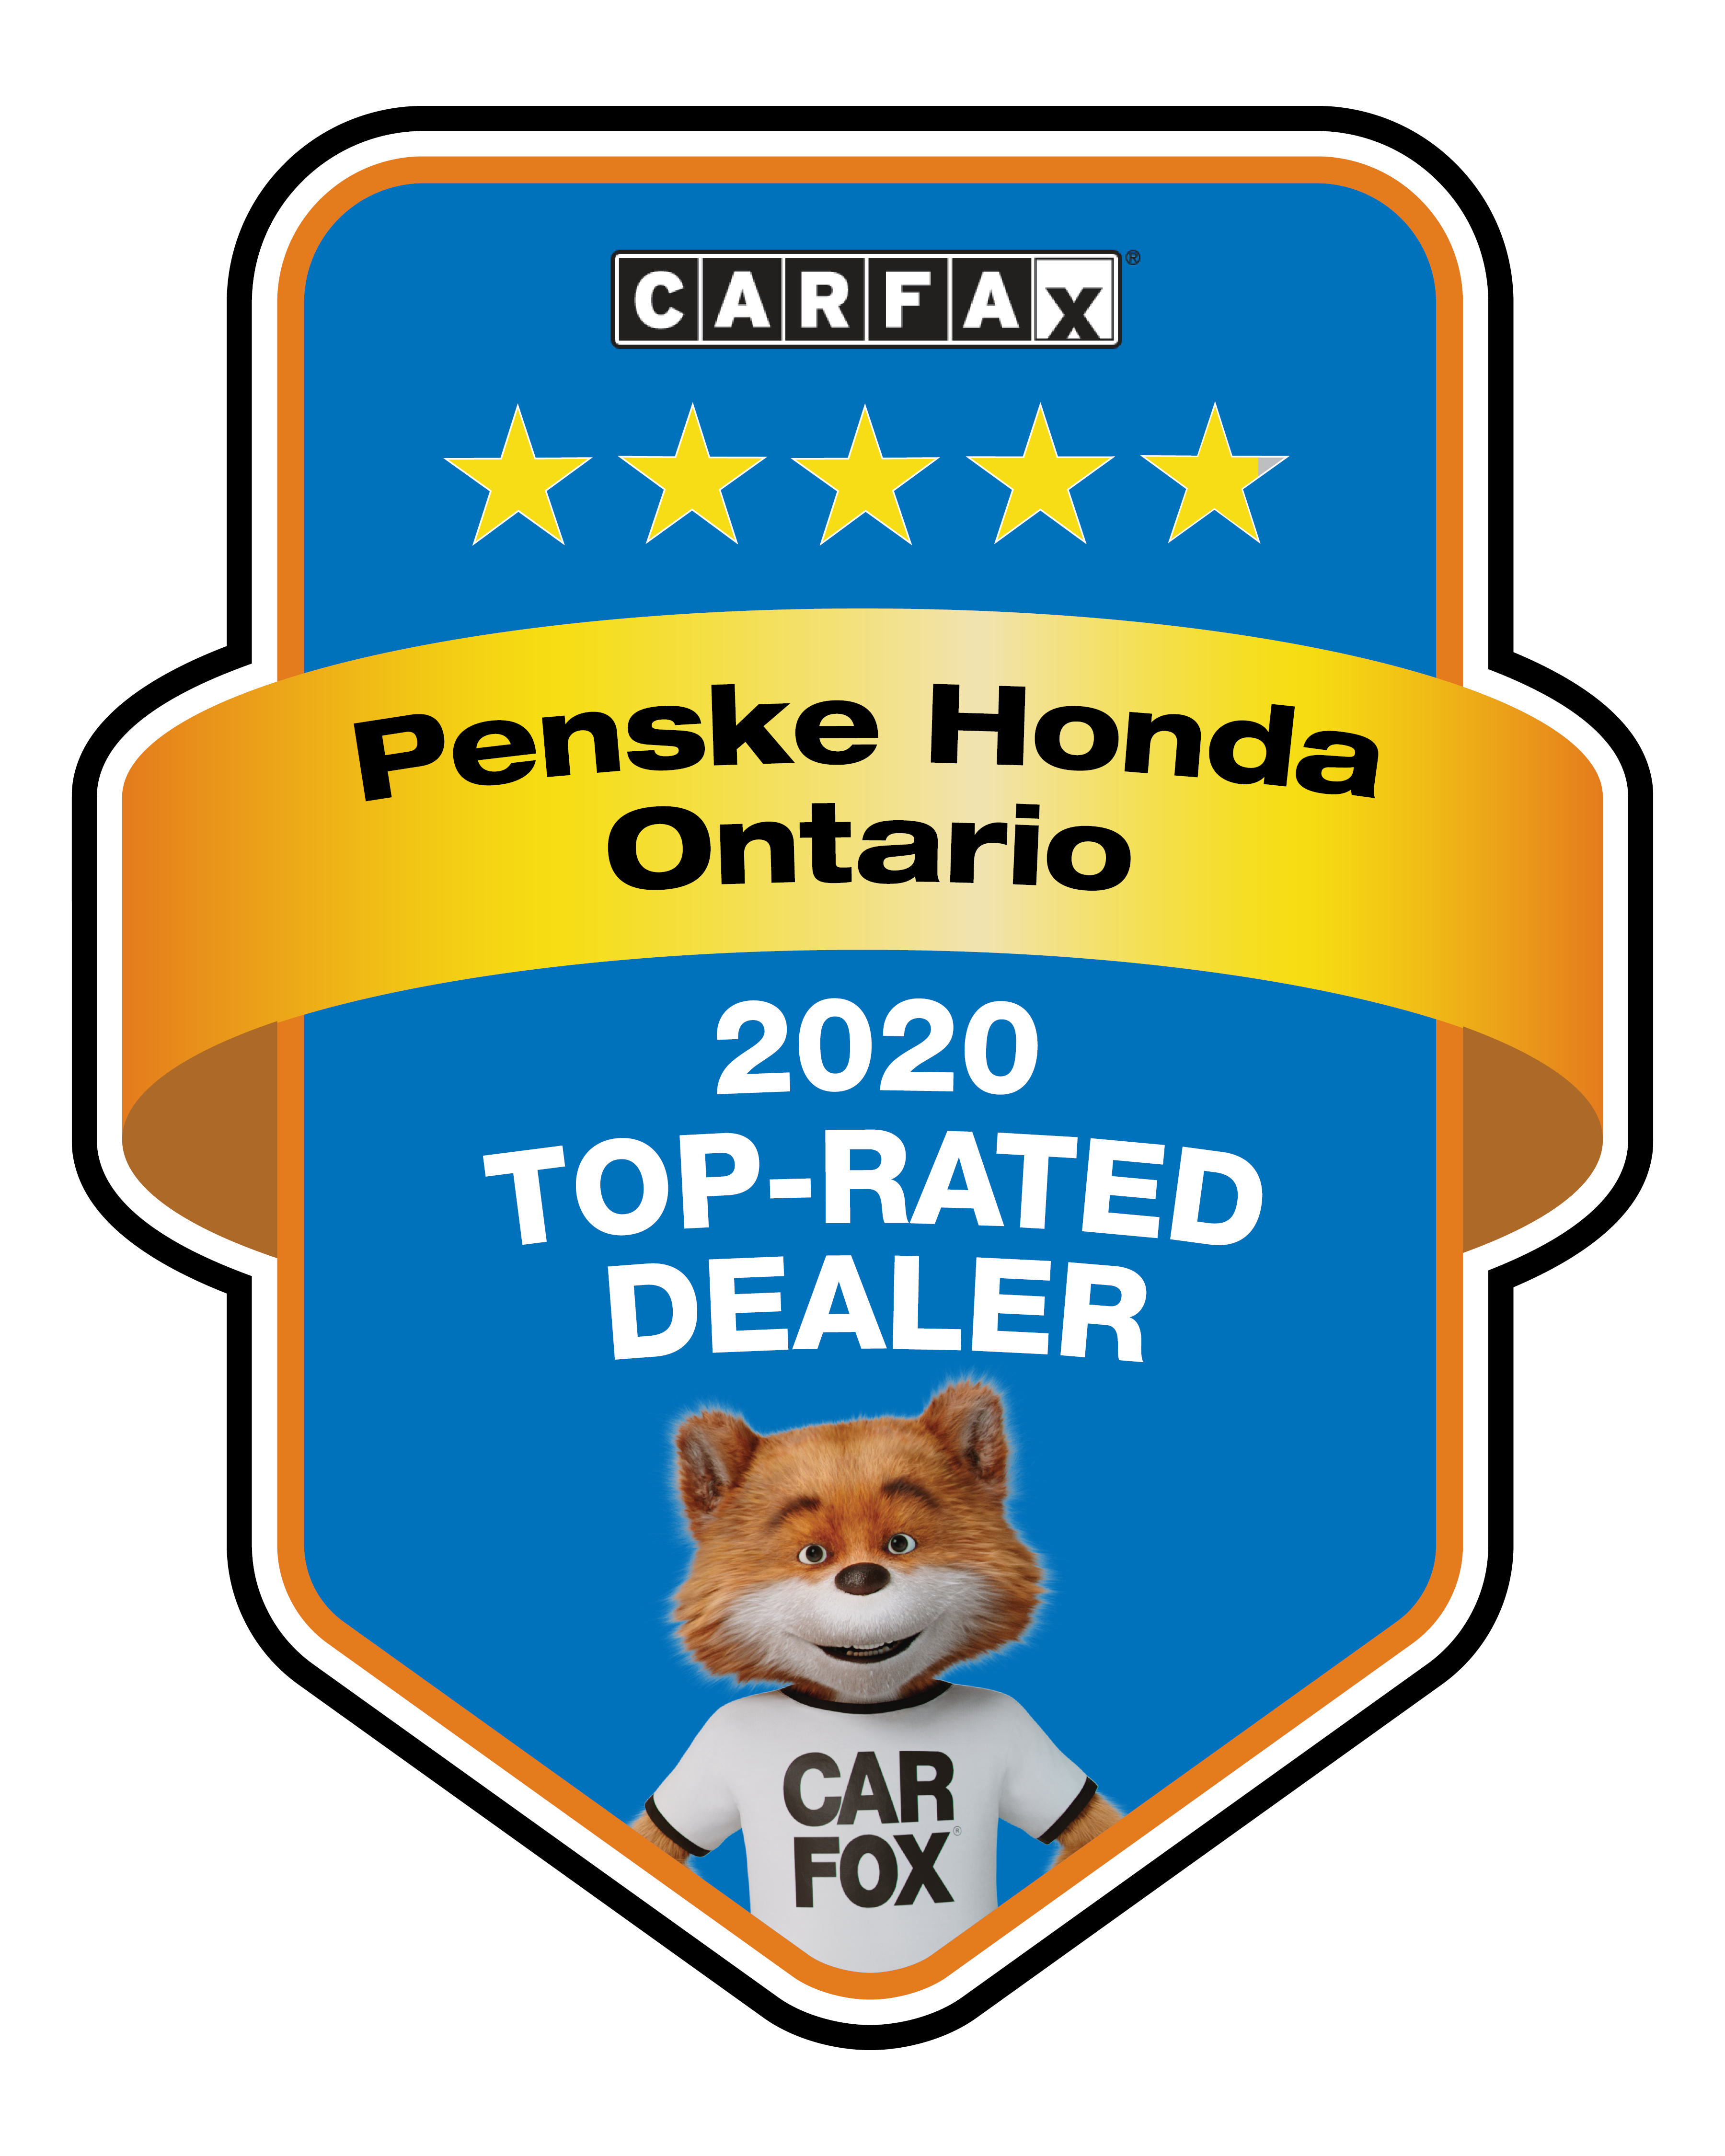 Penske Honda Ontario in Ontario, CA is CarFax Top Rated Dealer of the Year 2020